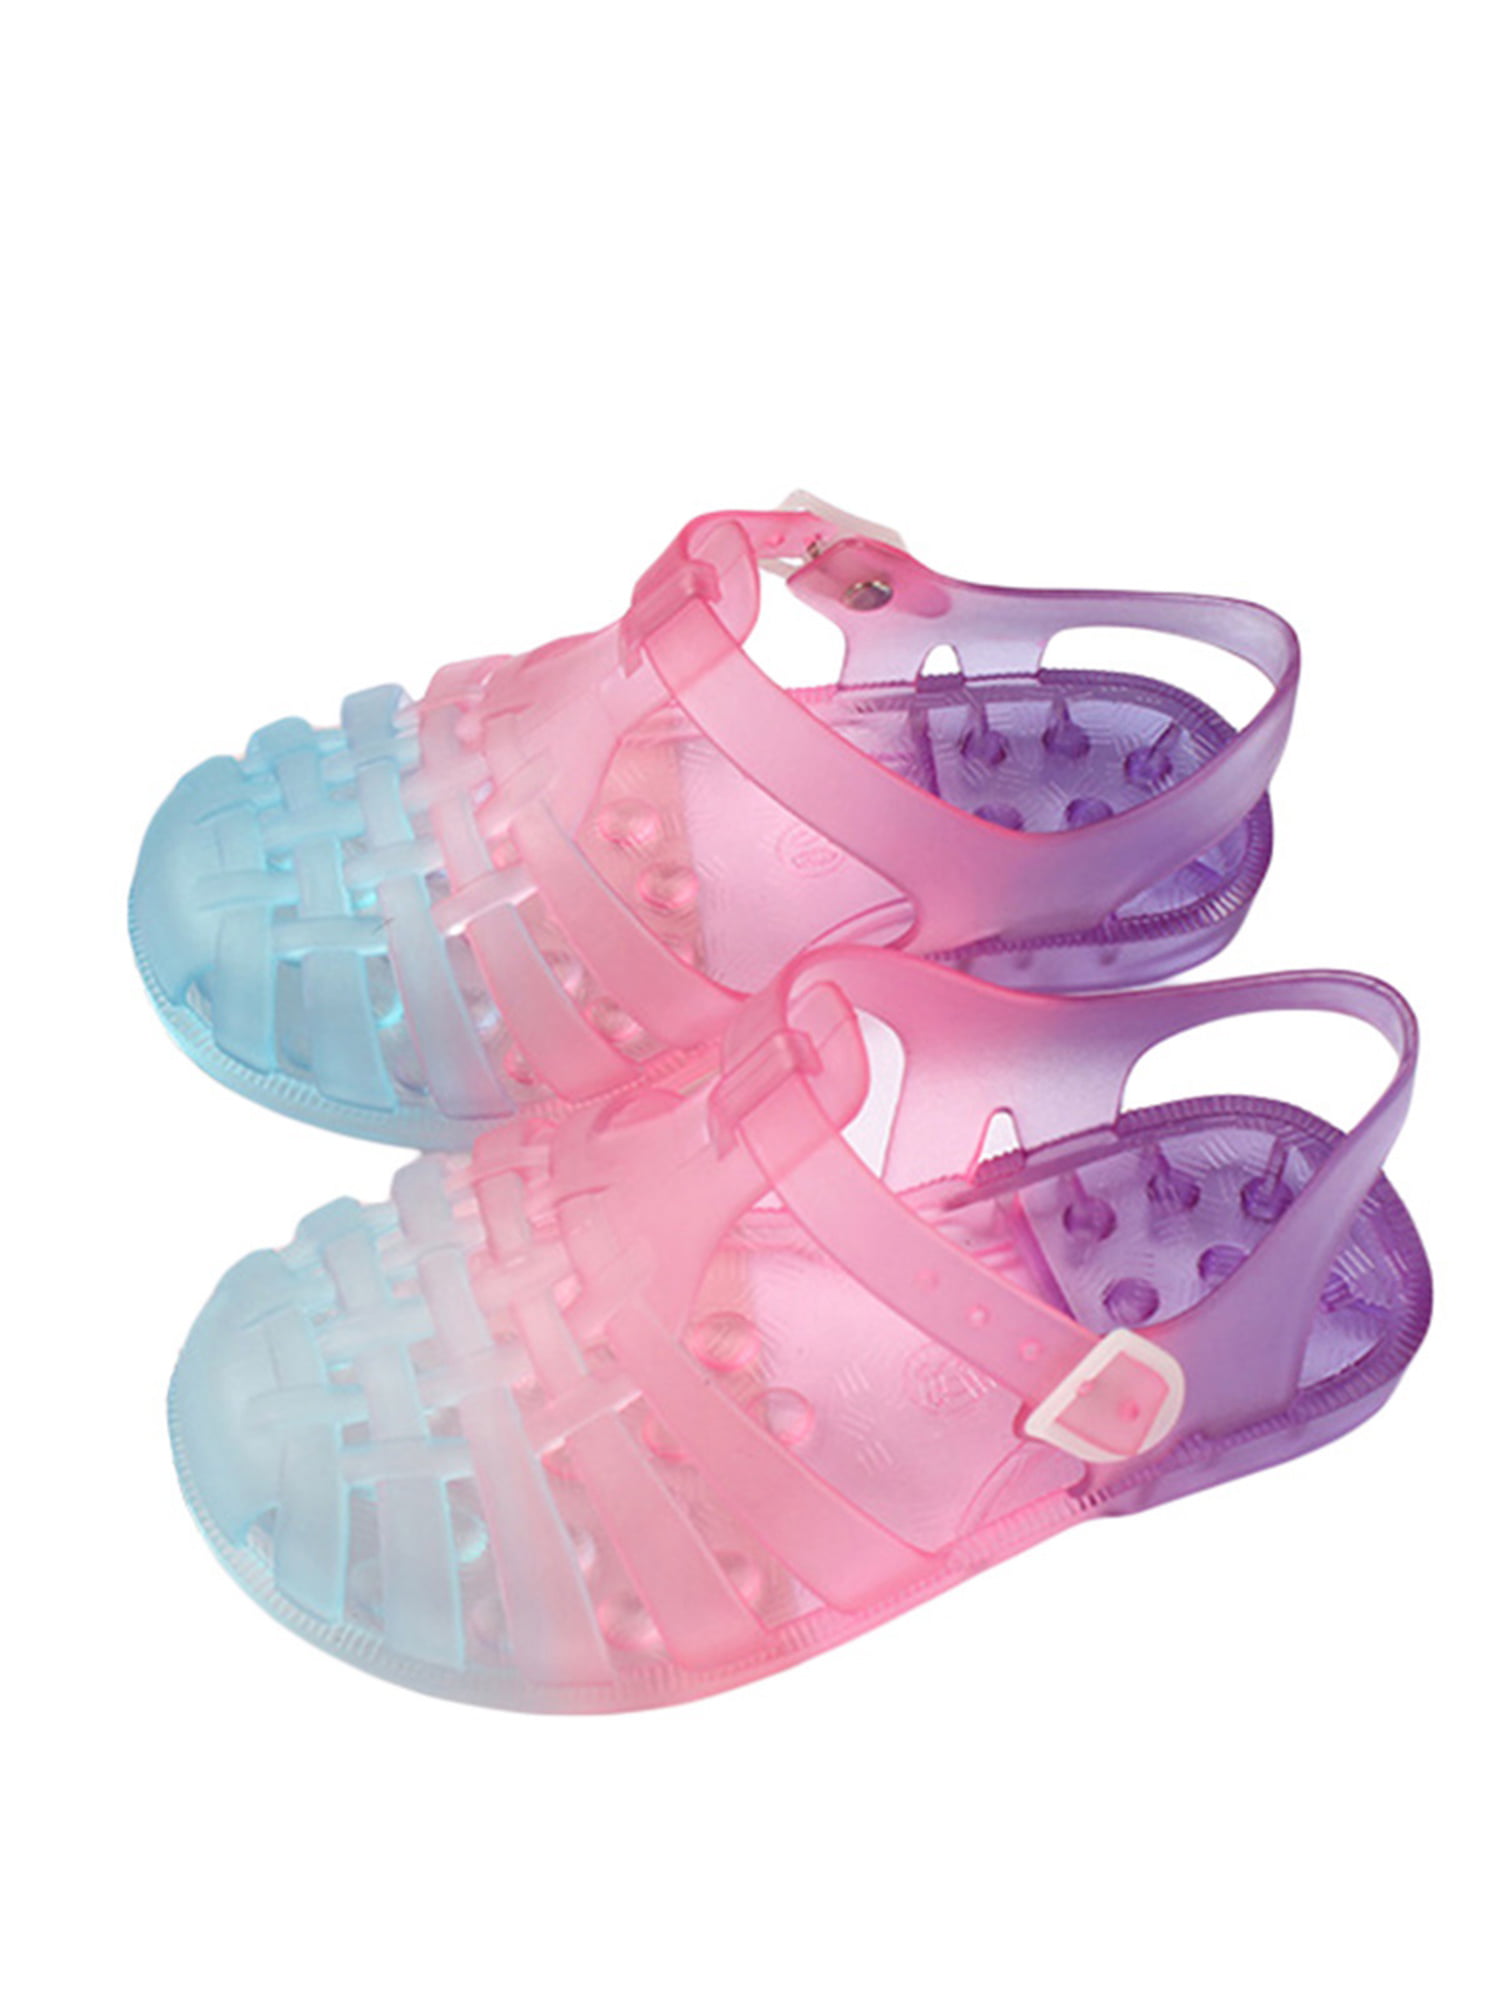 Baby Girls Shoes for Kids Toddler Soft Sole Elegant Strawberry Princess Shoes Summer Sandals 